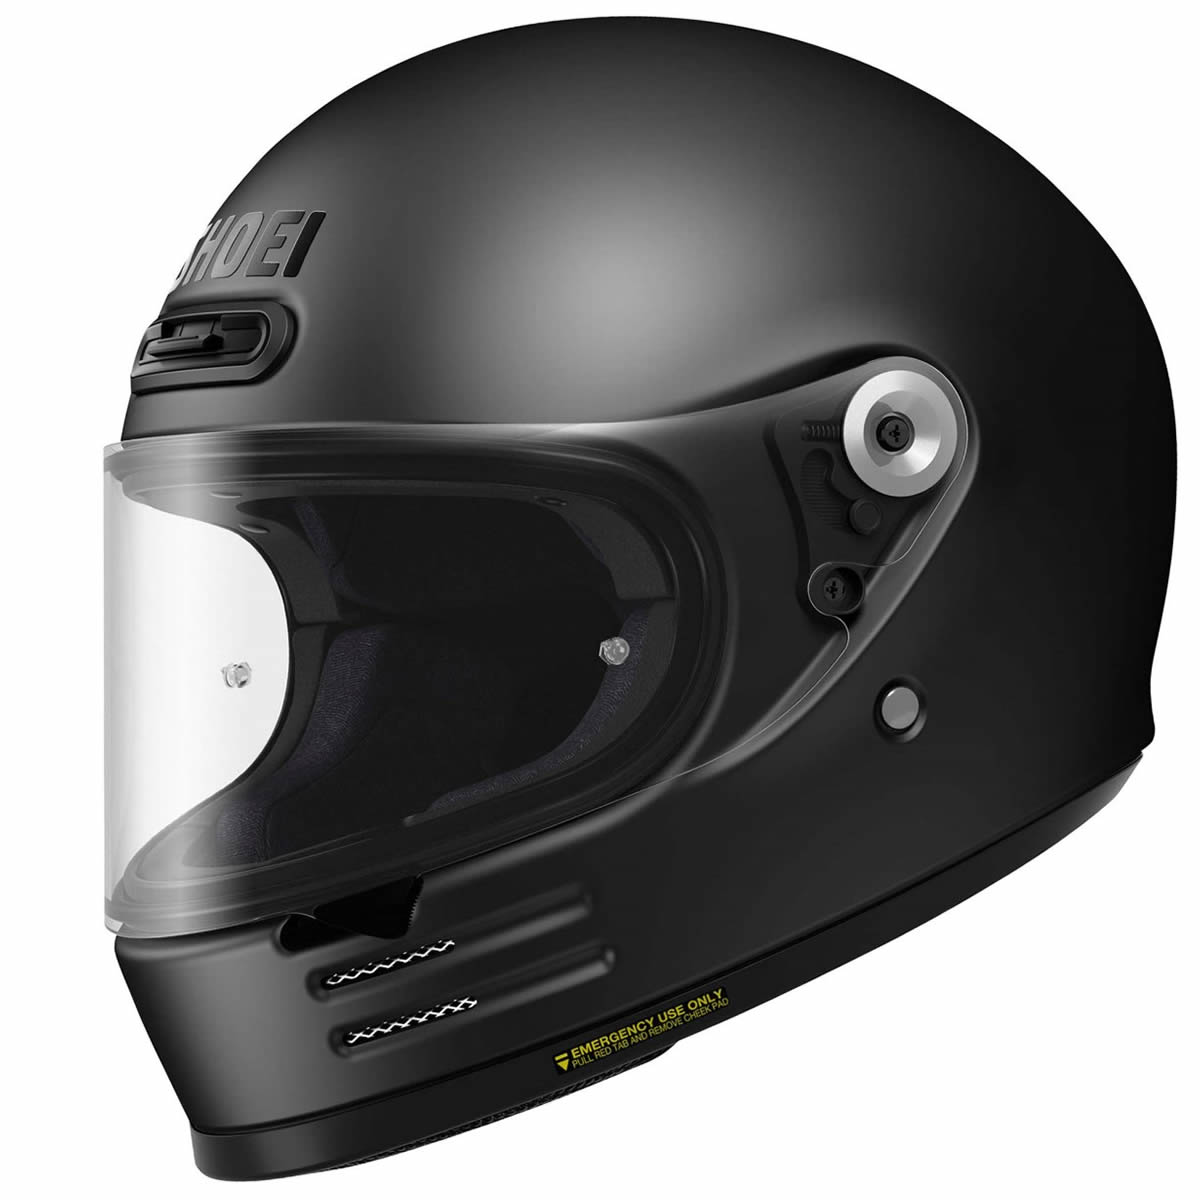 Shoei Glamster 06 Helm, schwarz matt